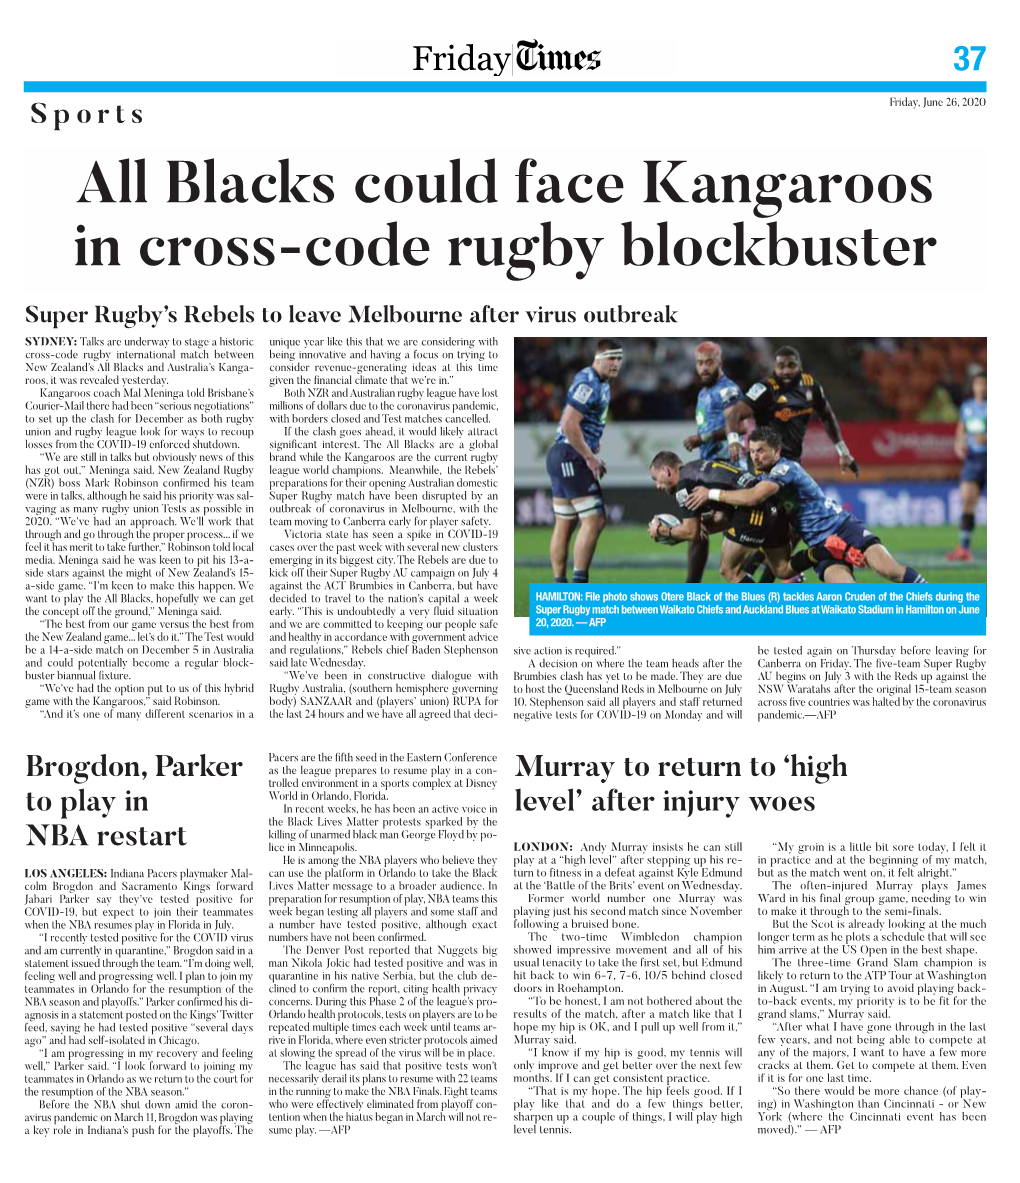 Blacks Could Face Kangaroos in Cross-Code Rugby Blockbuster